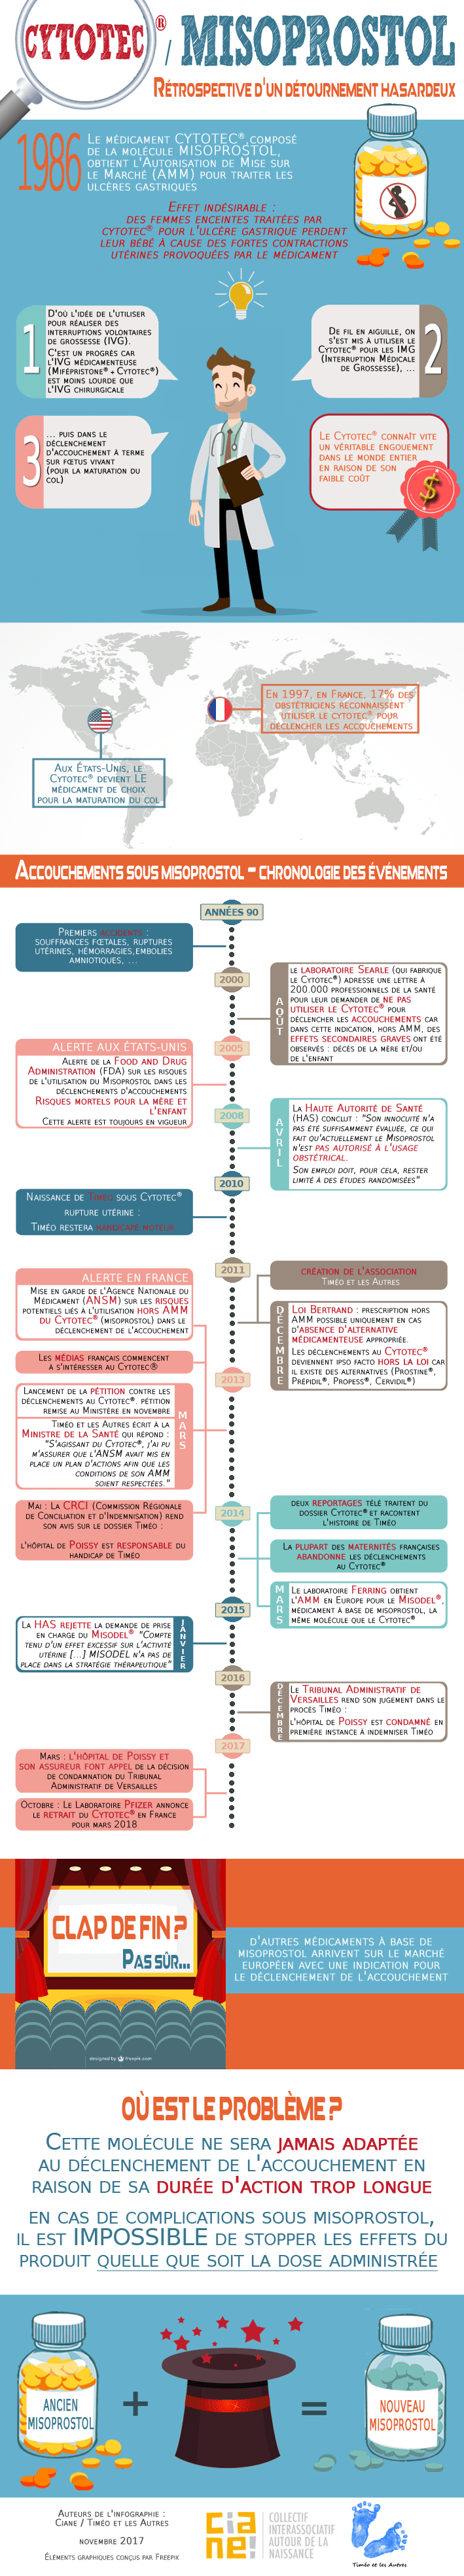 infographie cytotec misoprostol ciane timéo 2017